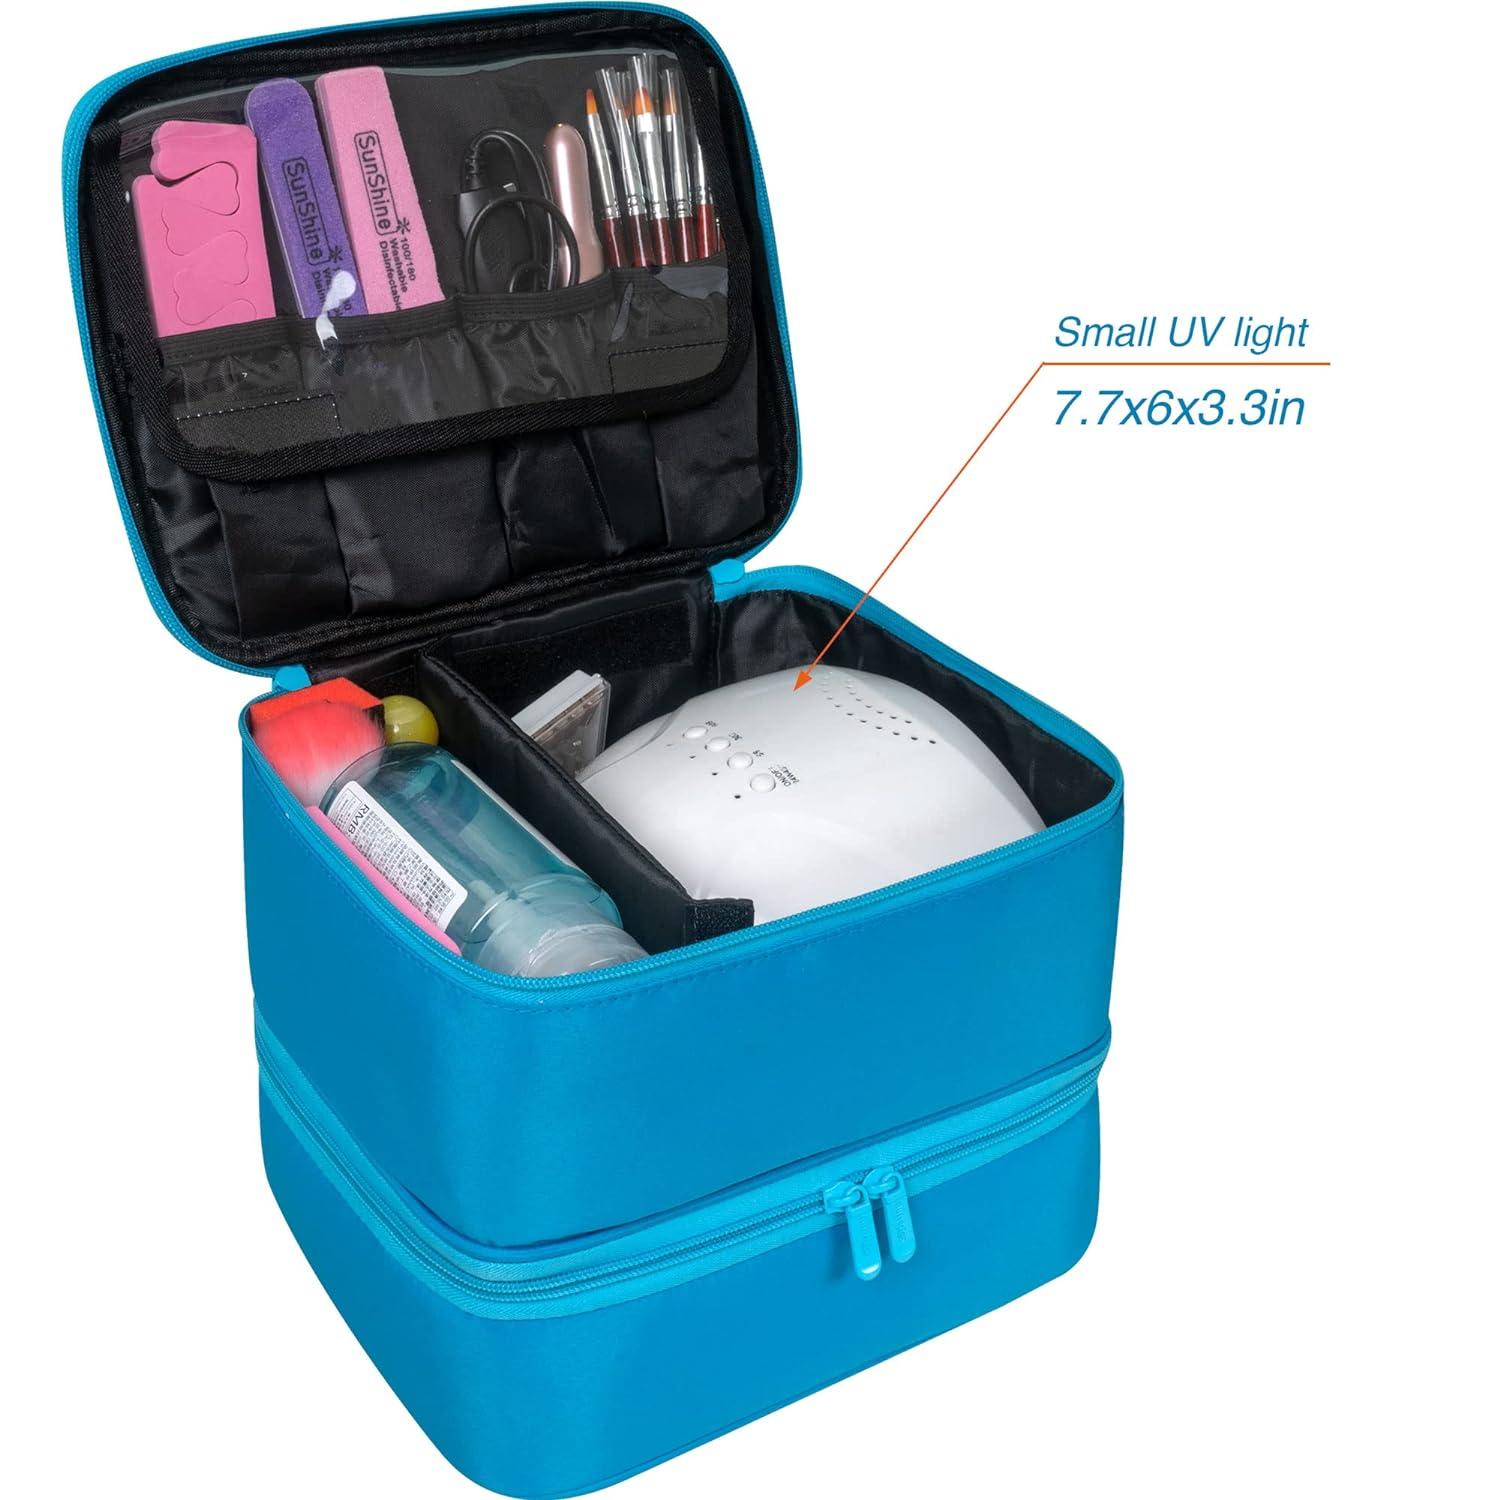 ButterFox Large Nail Polish Storage Organizer Holder Carrying Case Bag, Fits 40-50 Bottles (0.5 fl oz - 0.3 fl oz), Pockets for Manicure Accessories